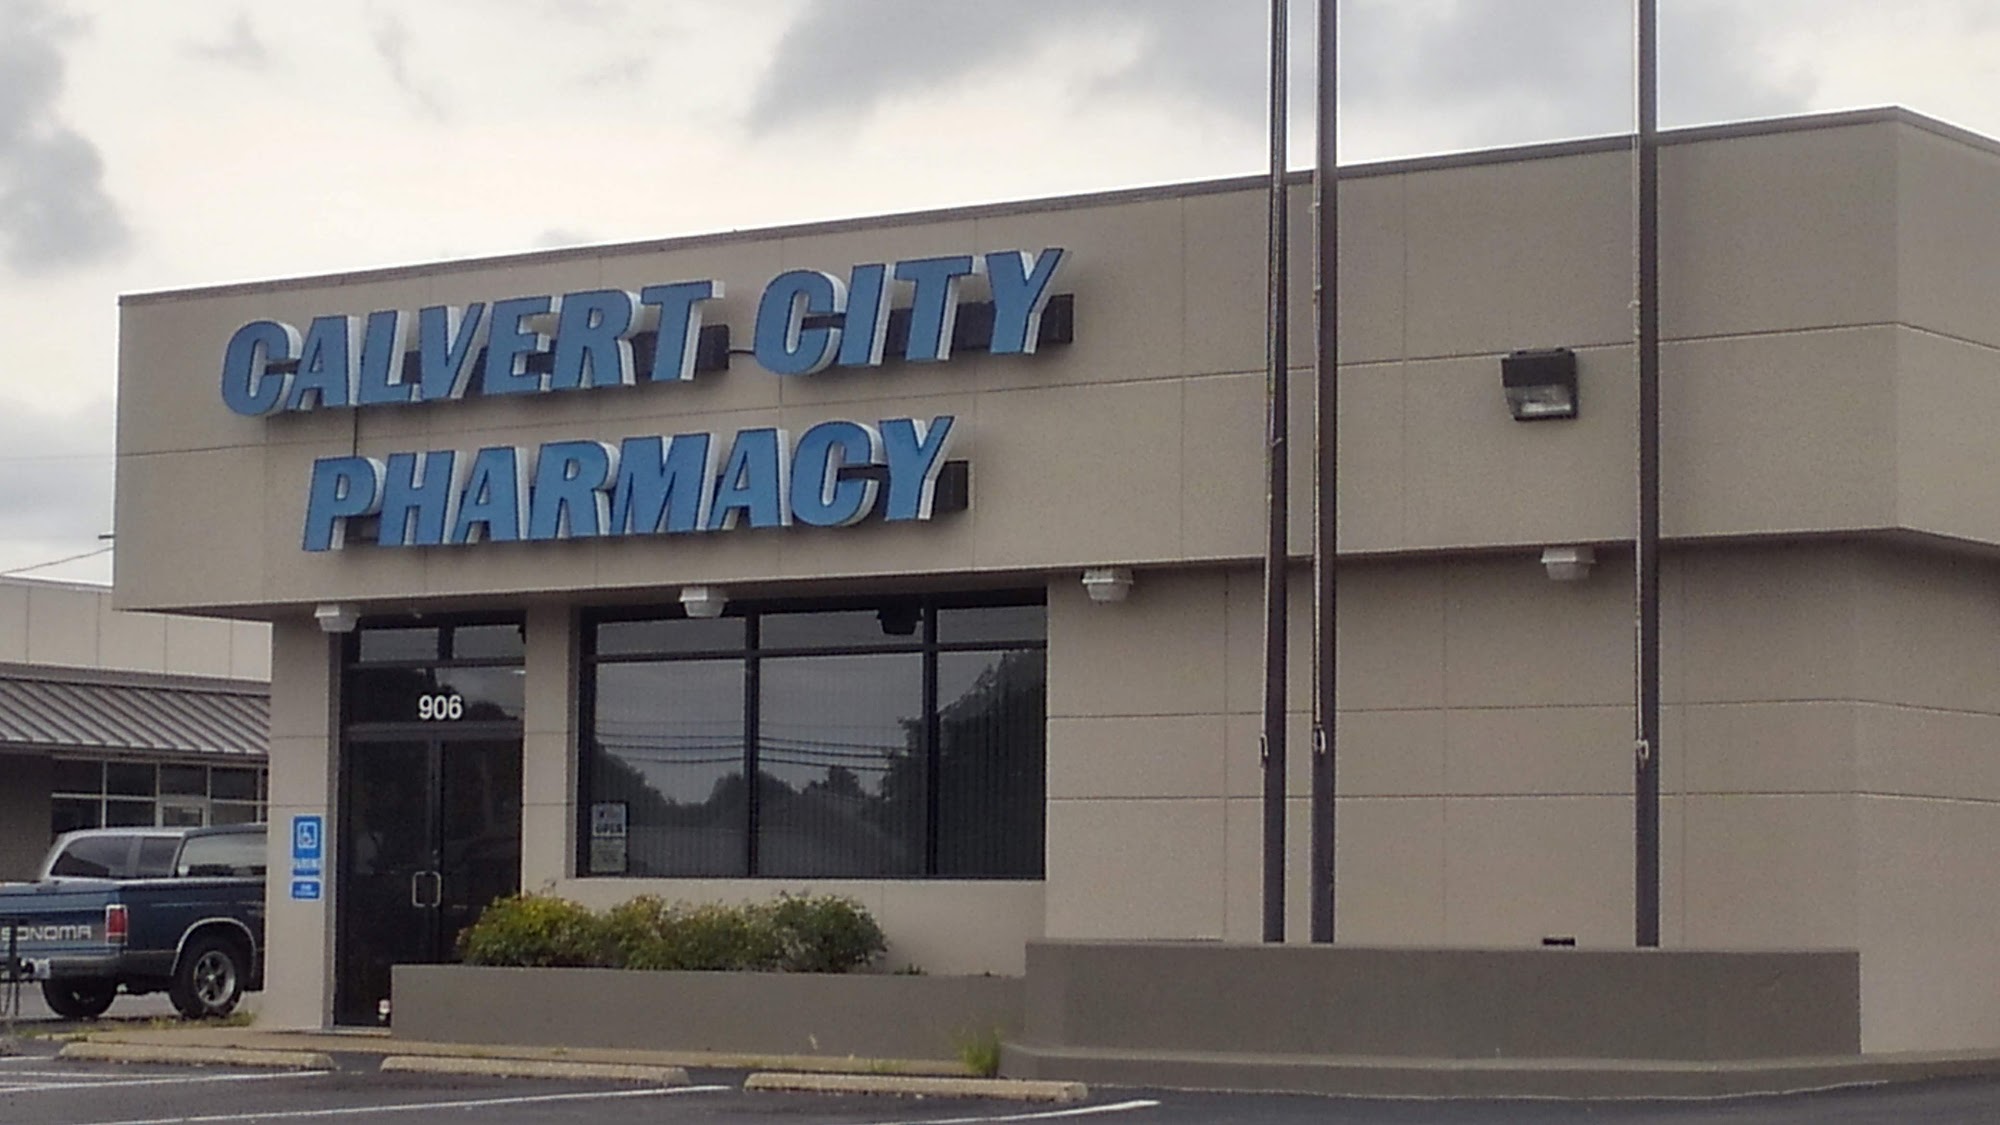 Calvert City Pharmacy